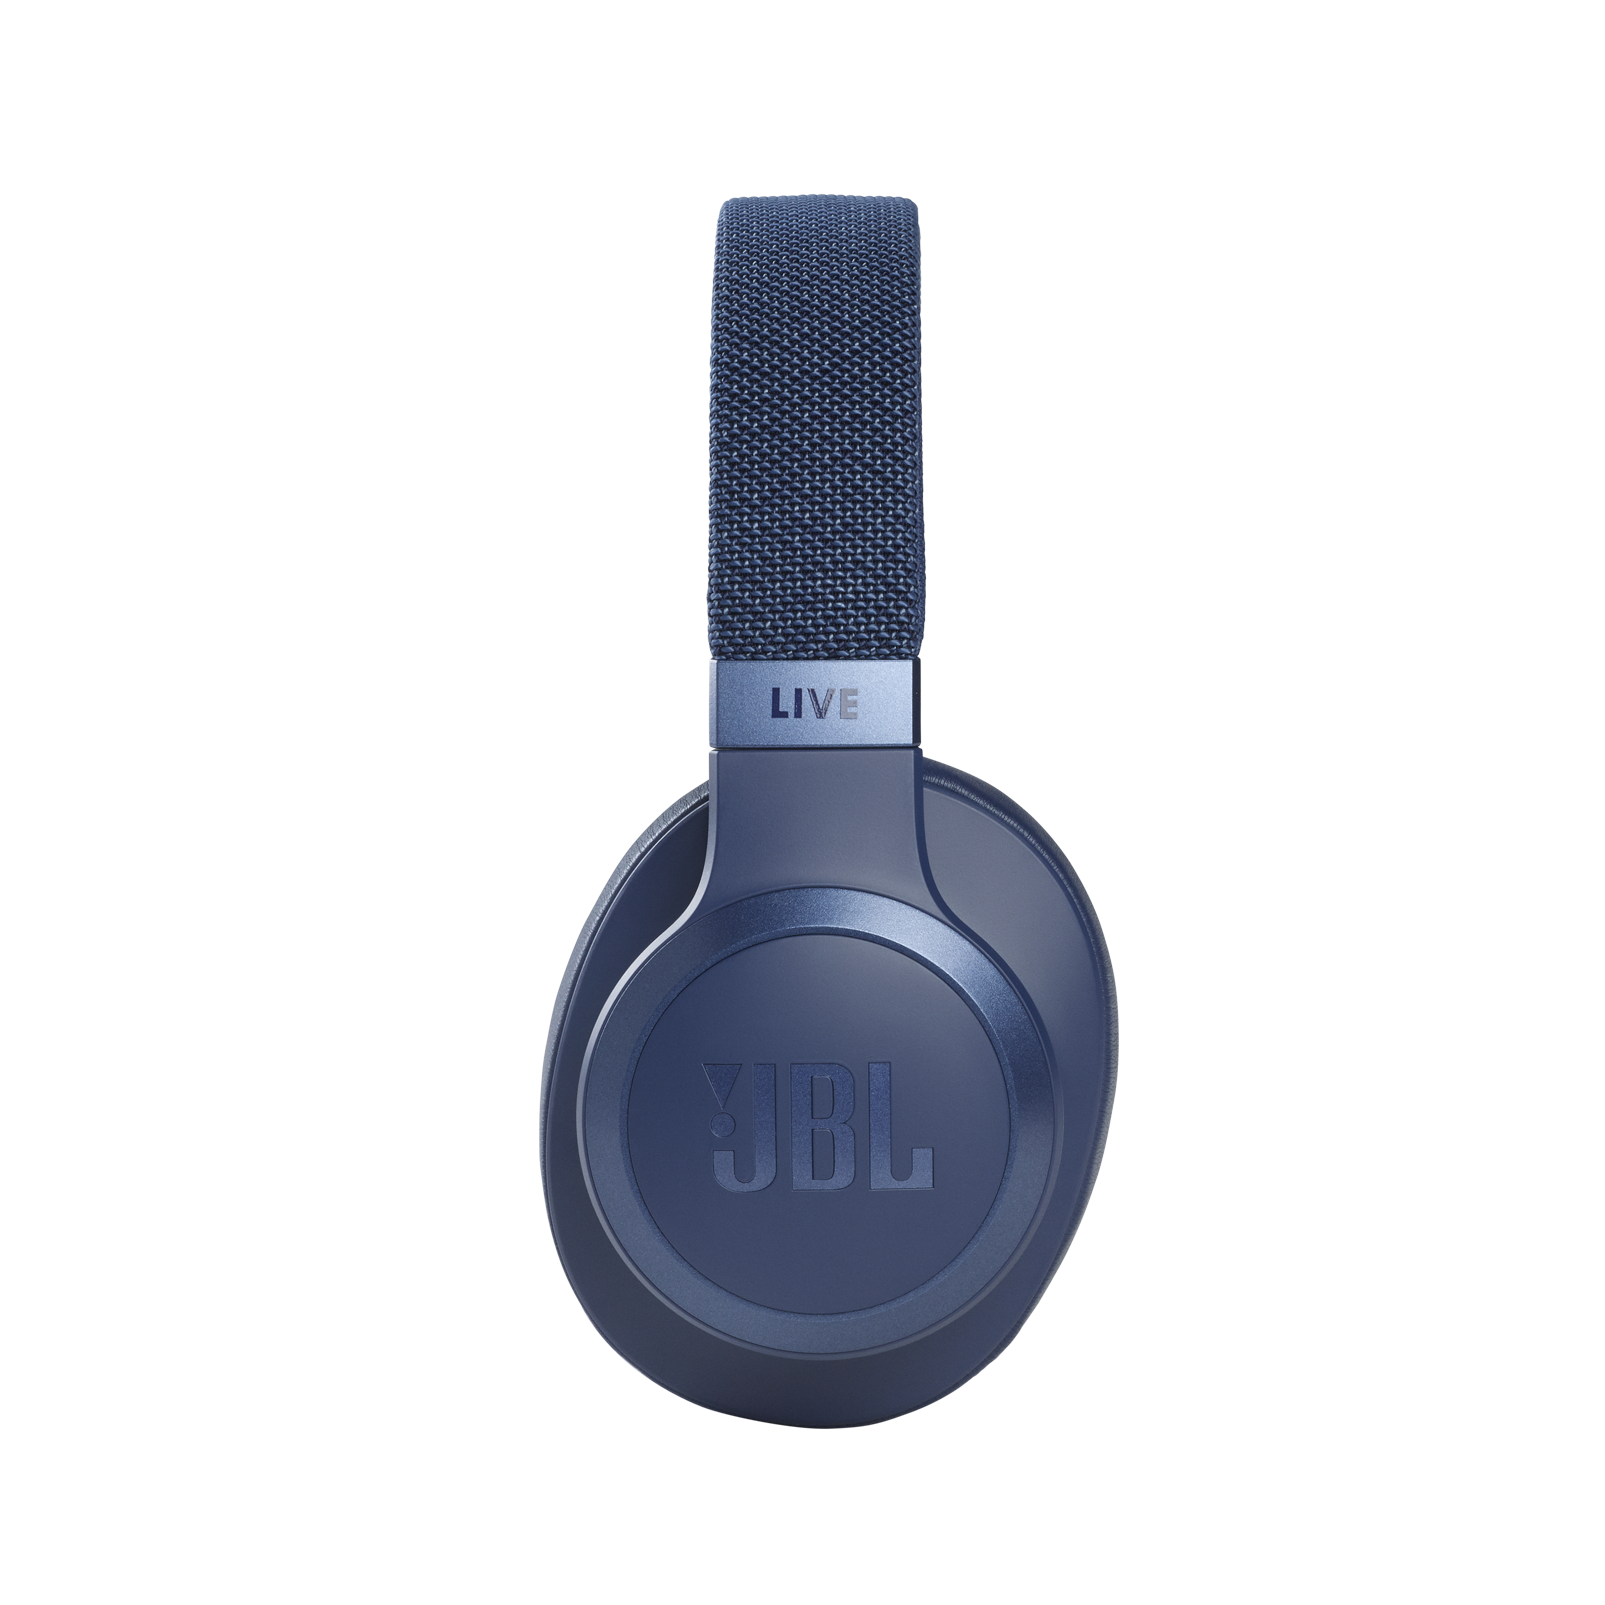 JBL Live 660NC - Blue - Wireless over-ear NC headphones - Detailshot 1